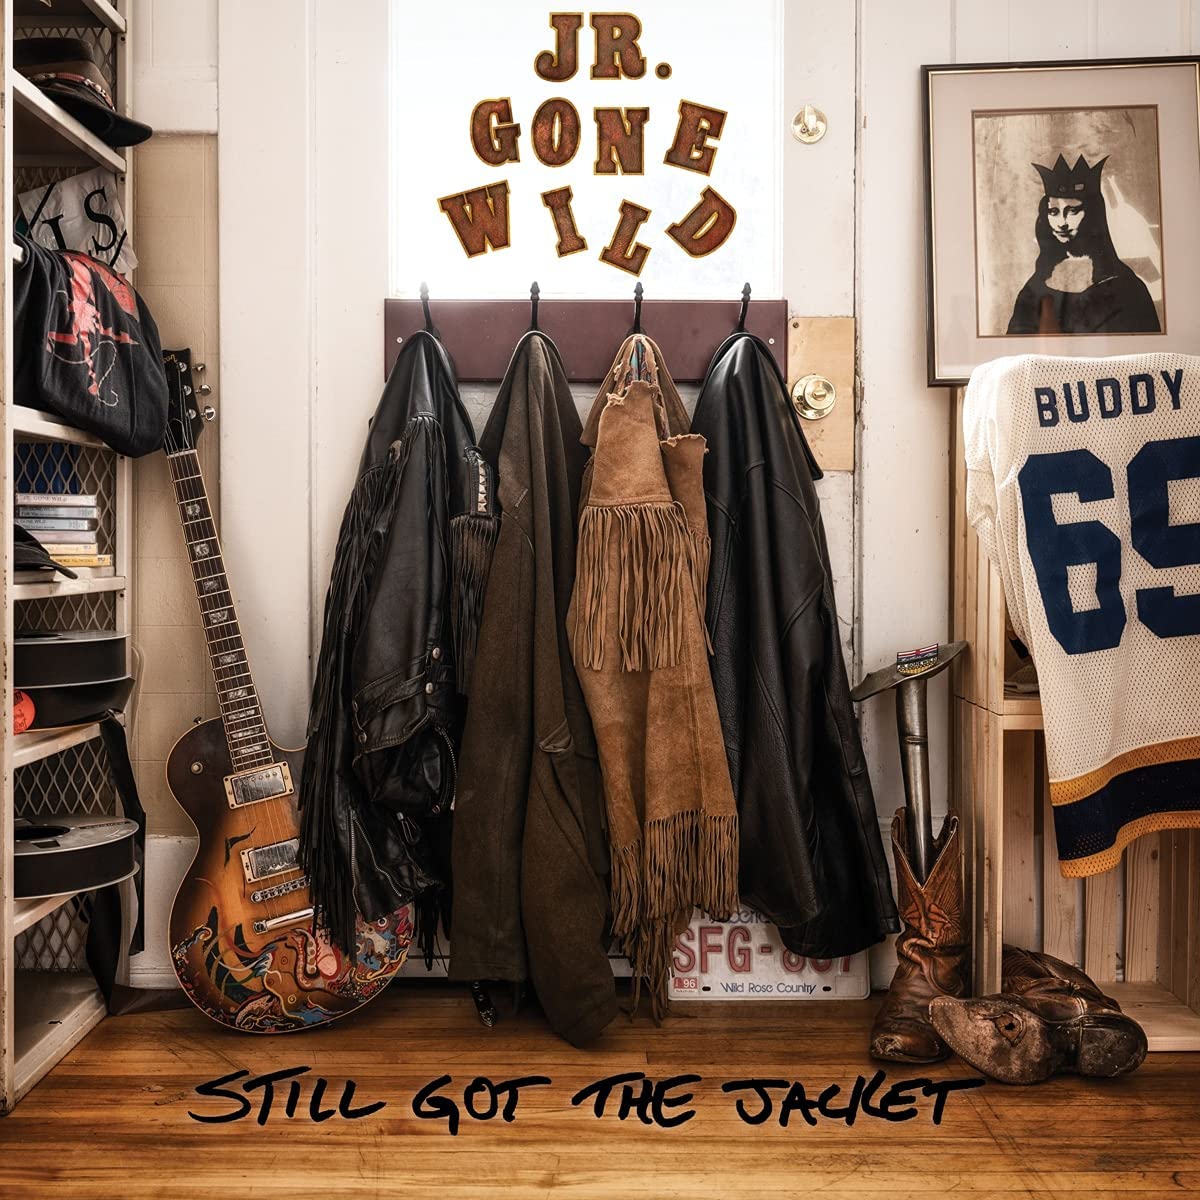 Jr. Gone Wild - Still Got The Jacket - CD